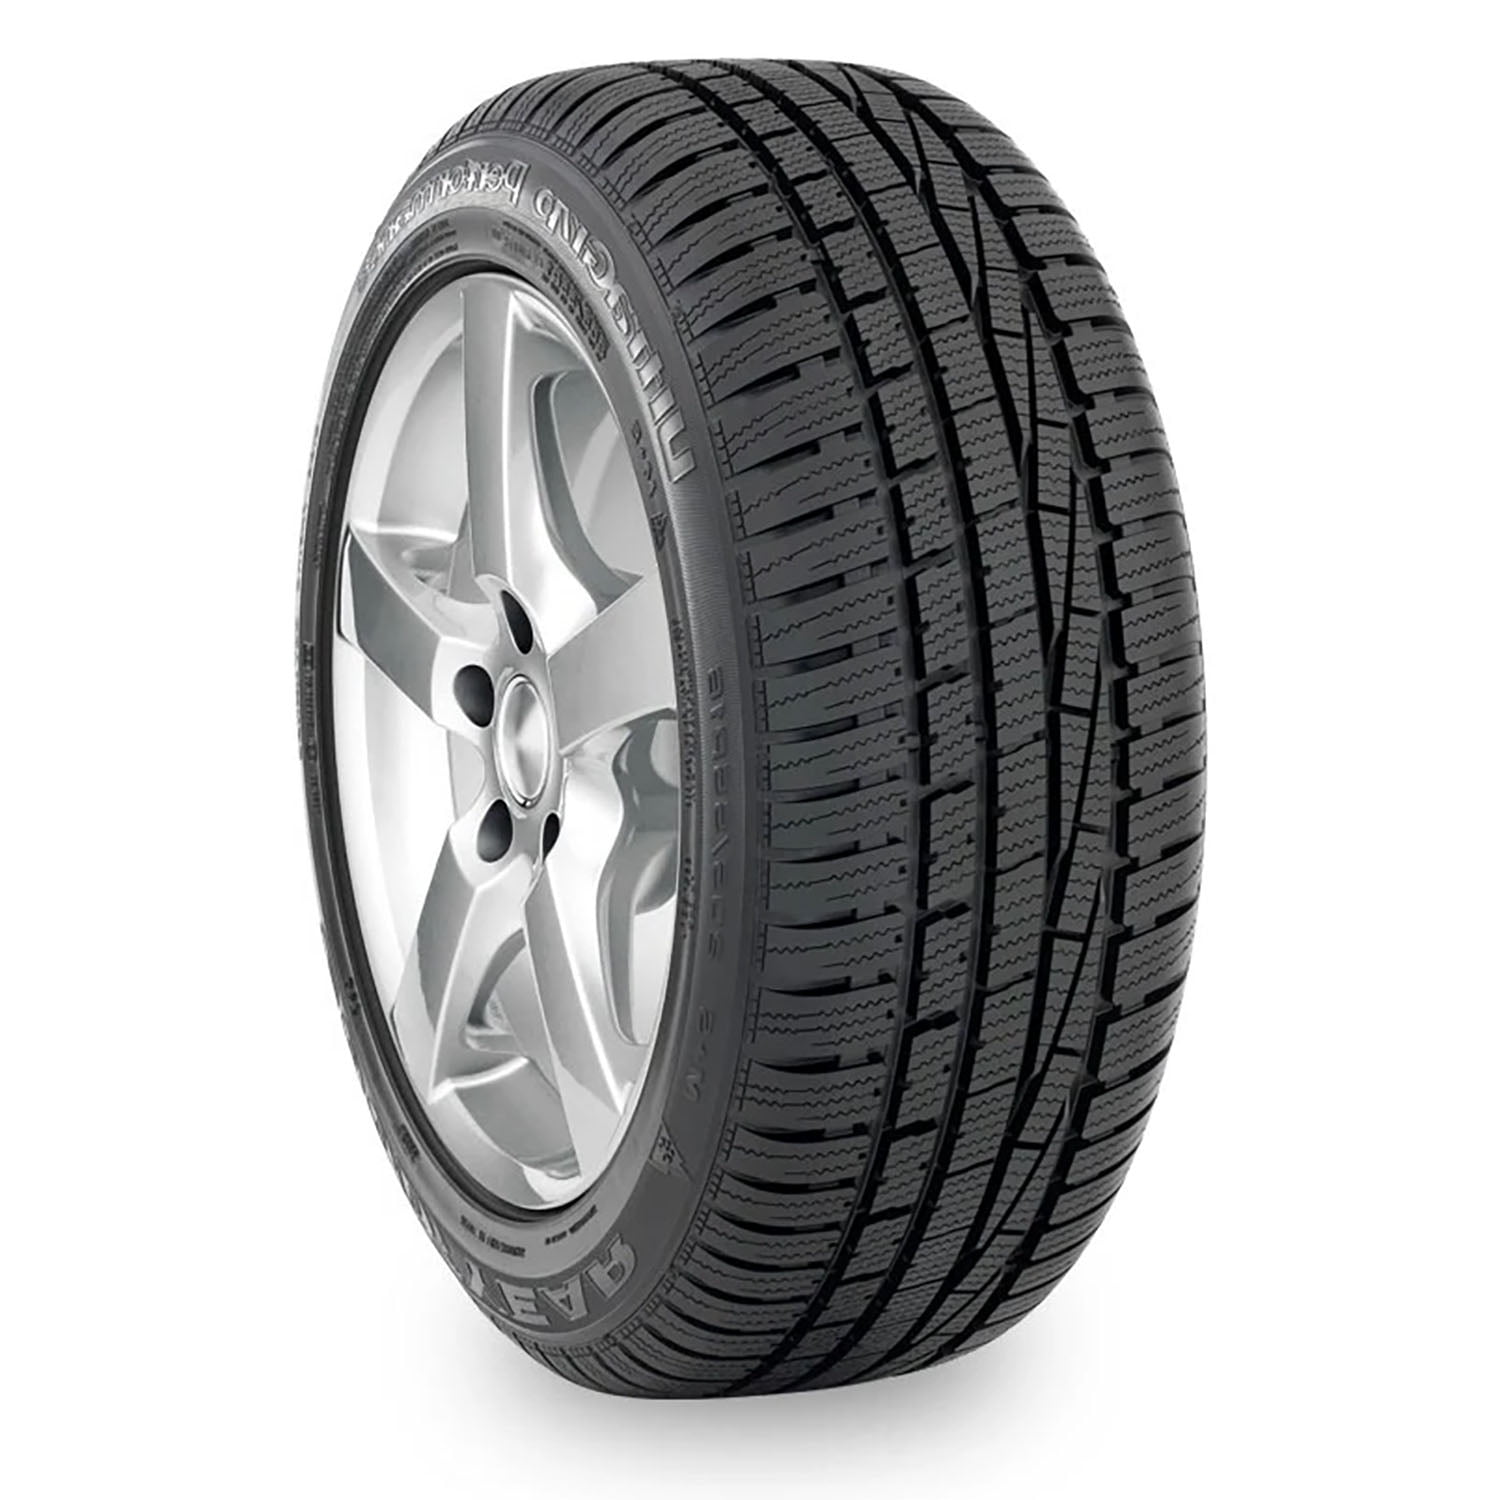 Fits: Tire Charger xDrive30e, 2020-21 245/45R20 103V Grip SXT Passenger Plus Dodge Performance Winter XL Goodyear X3 Ultra BMW 2012-13